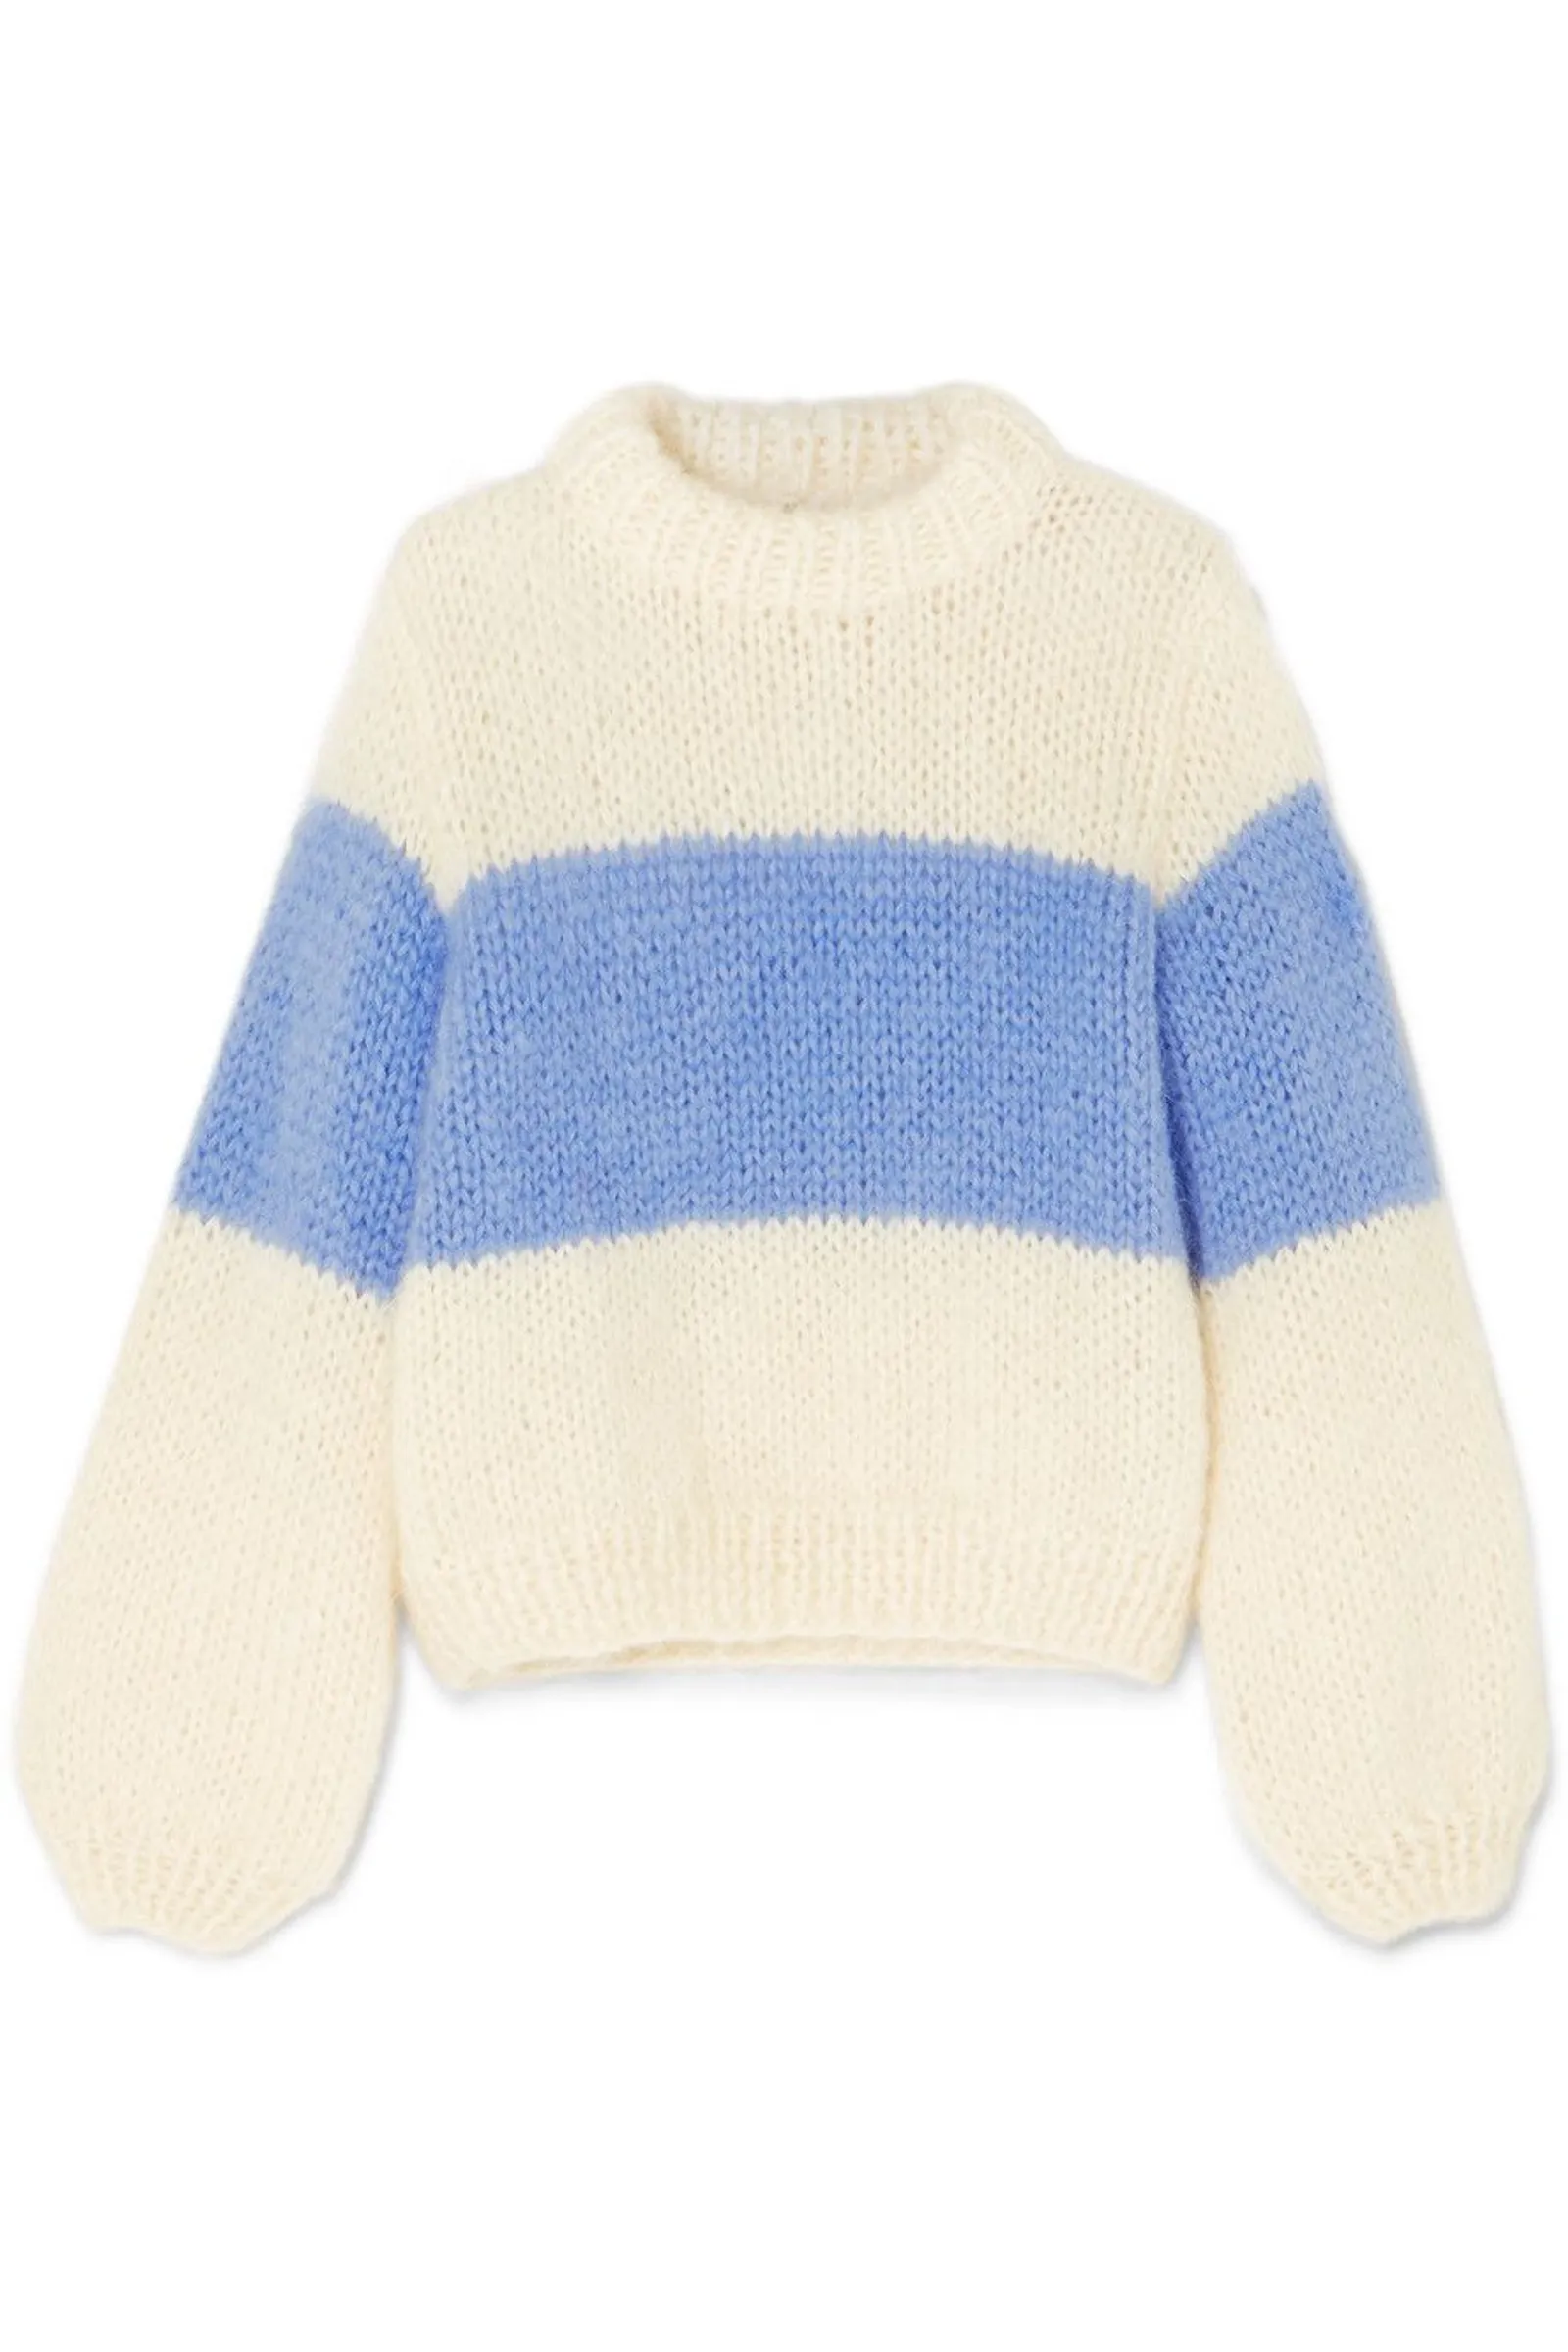 #PopbelaOOTD: Sweater Biru untuk Kesan yang Manis